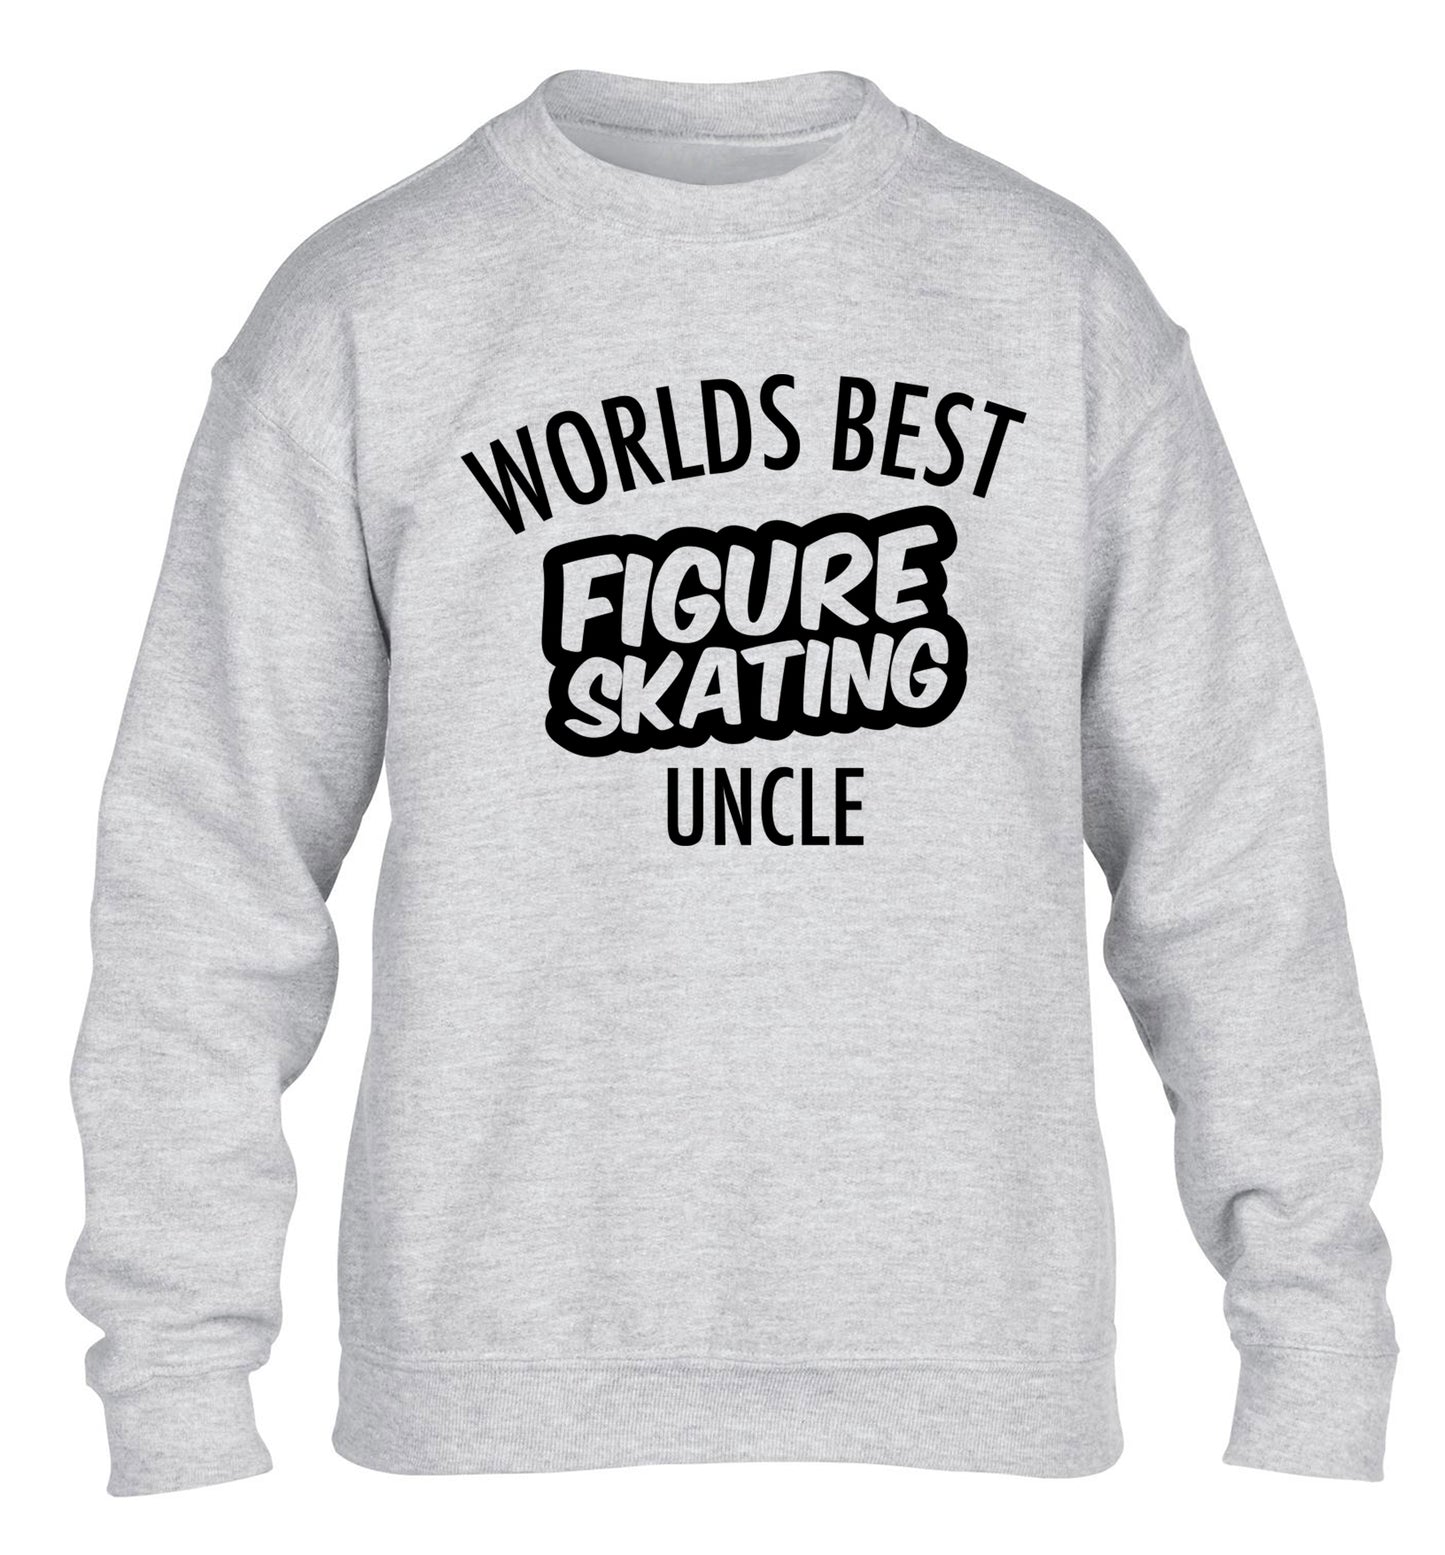 Worlds best figure skating uncle children's grey sweater 12-14 Years